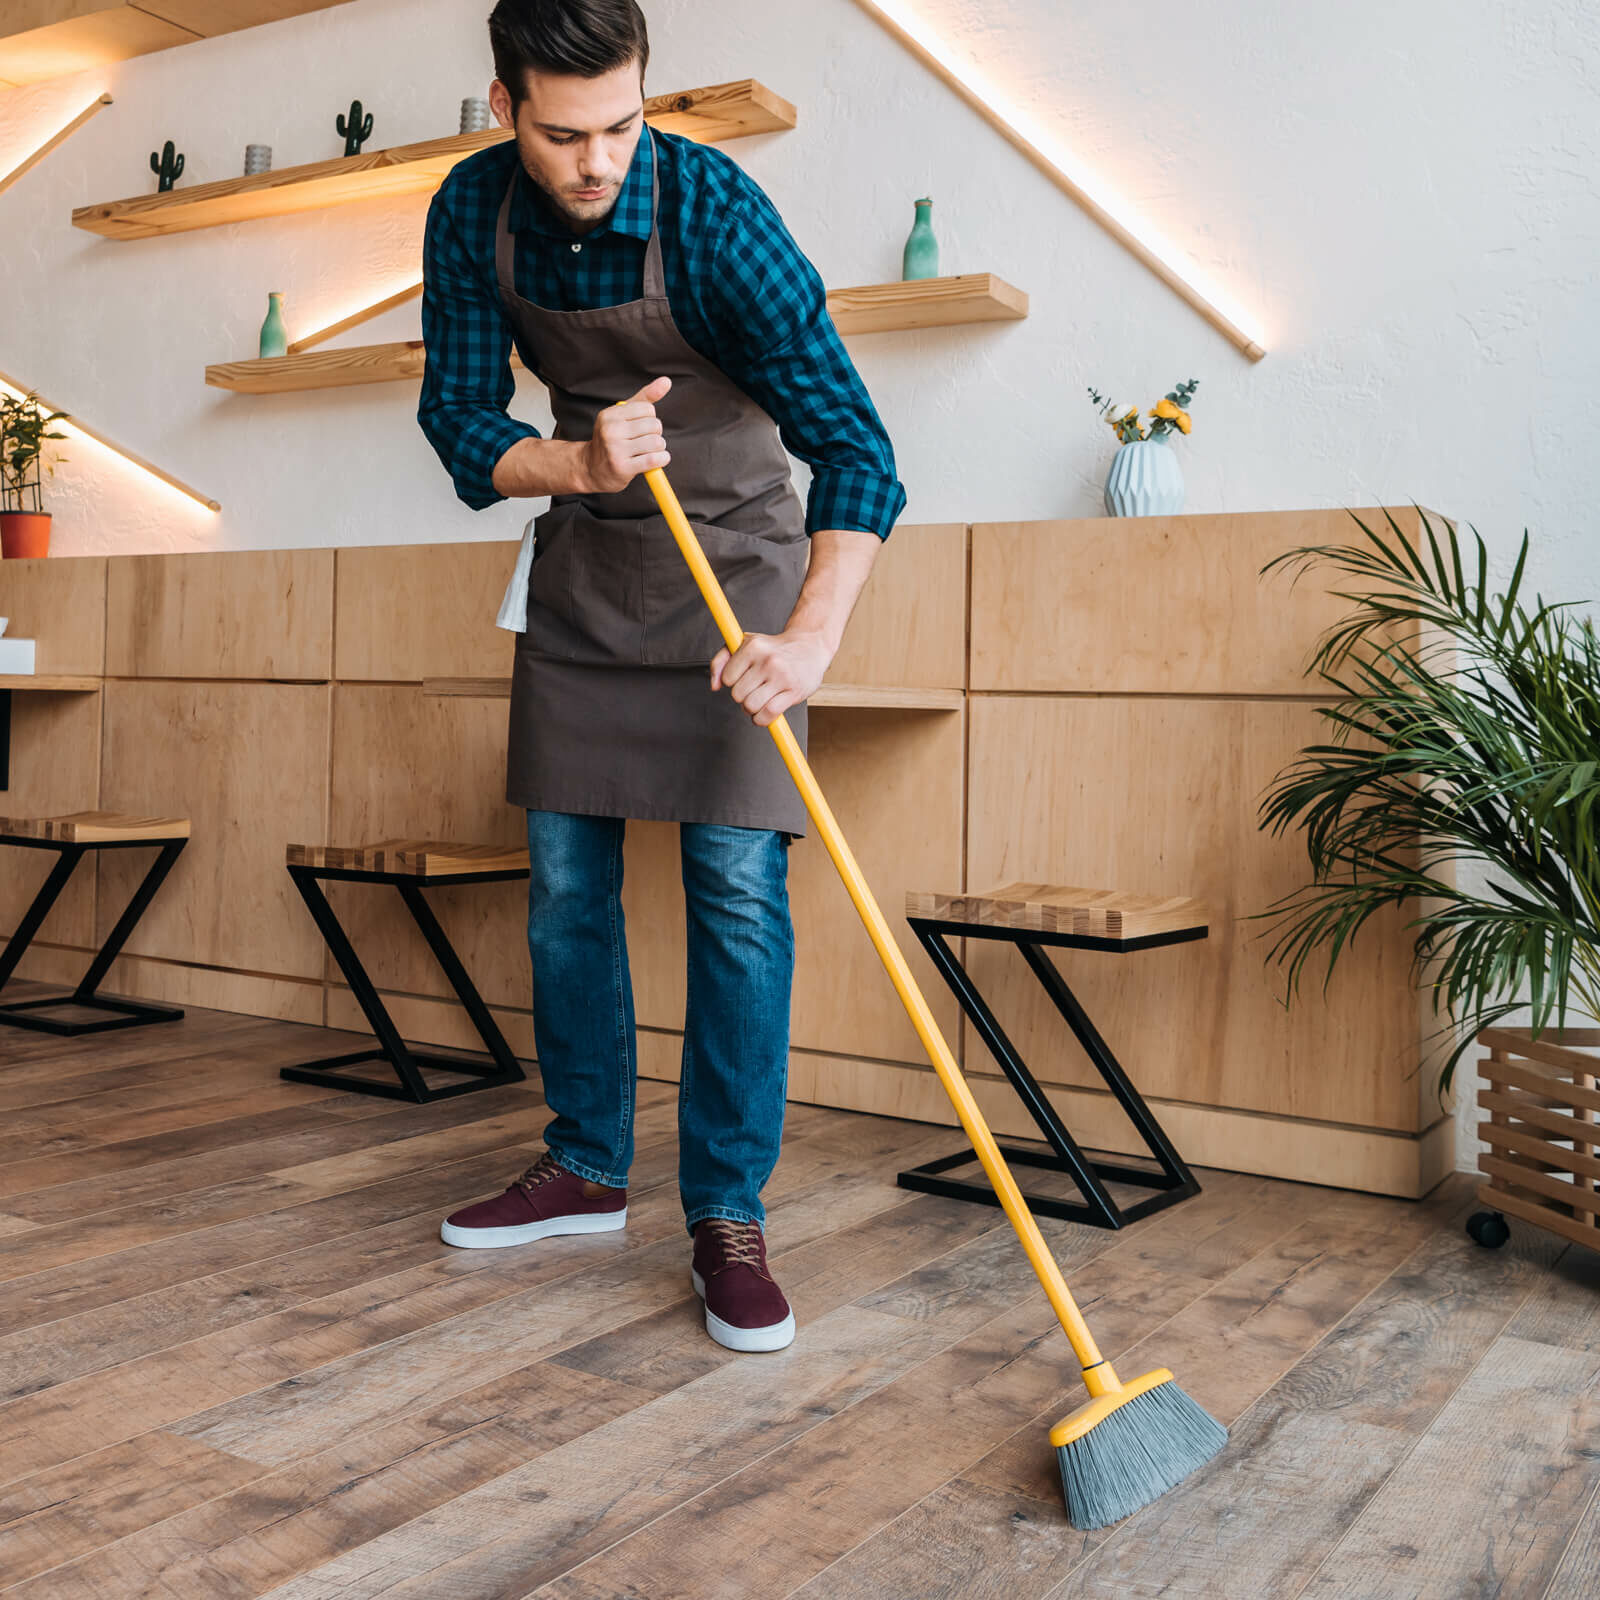 sweeping harwood | Tish flooring